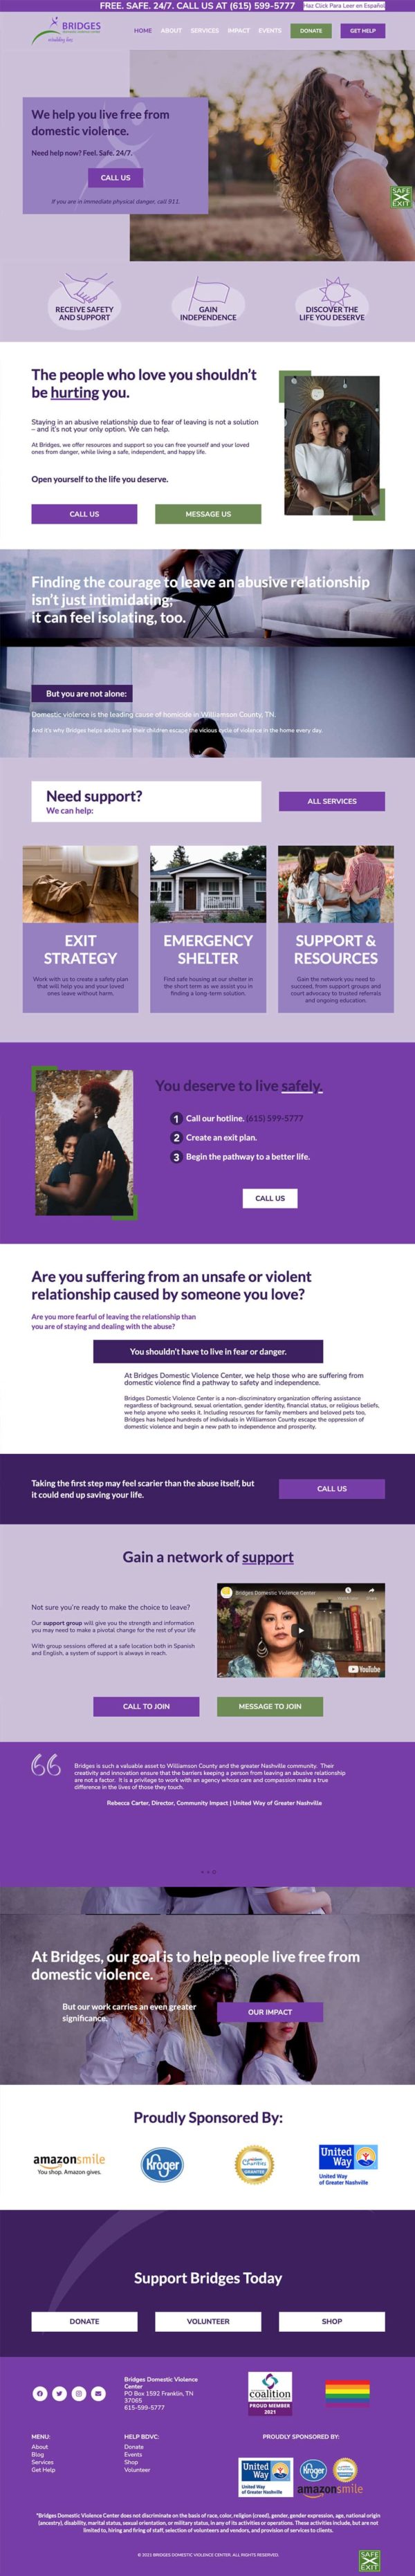 bridges-domestic-violence-center-website-img